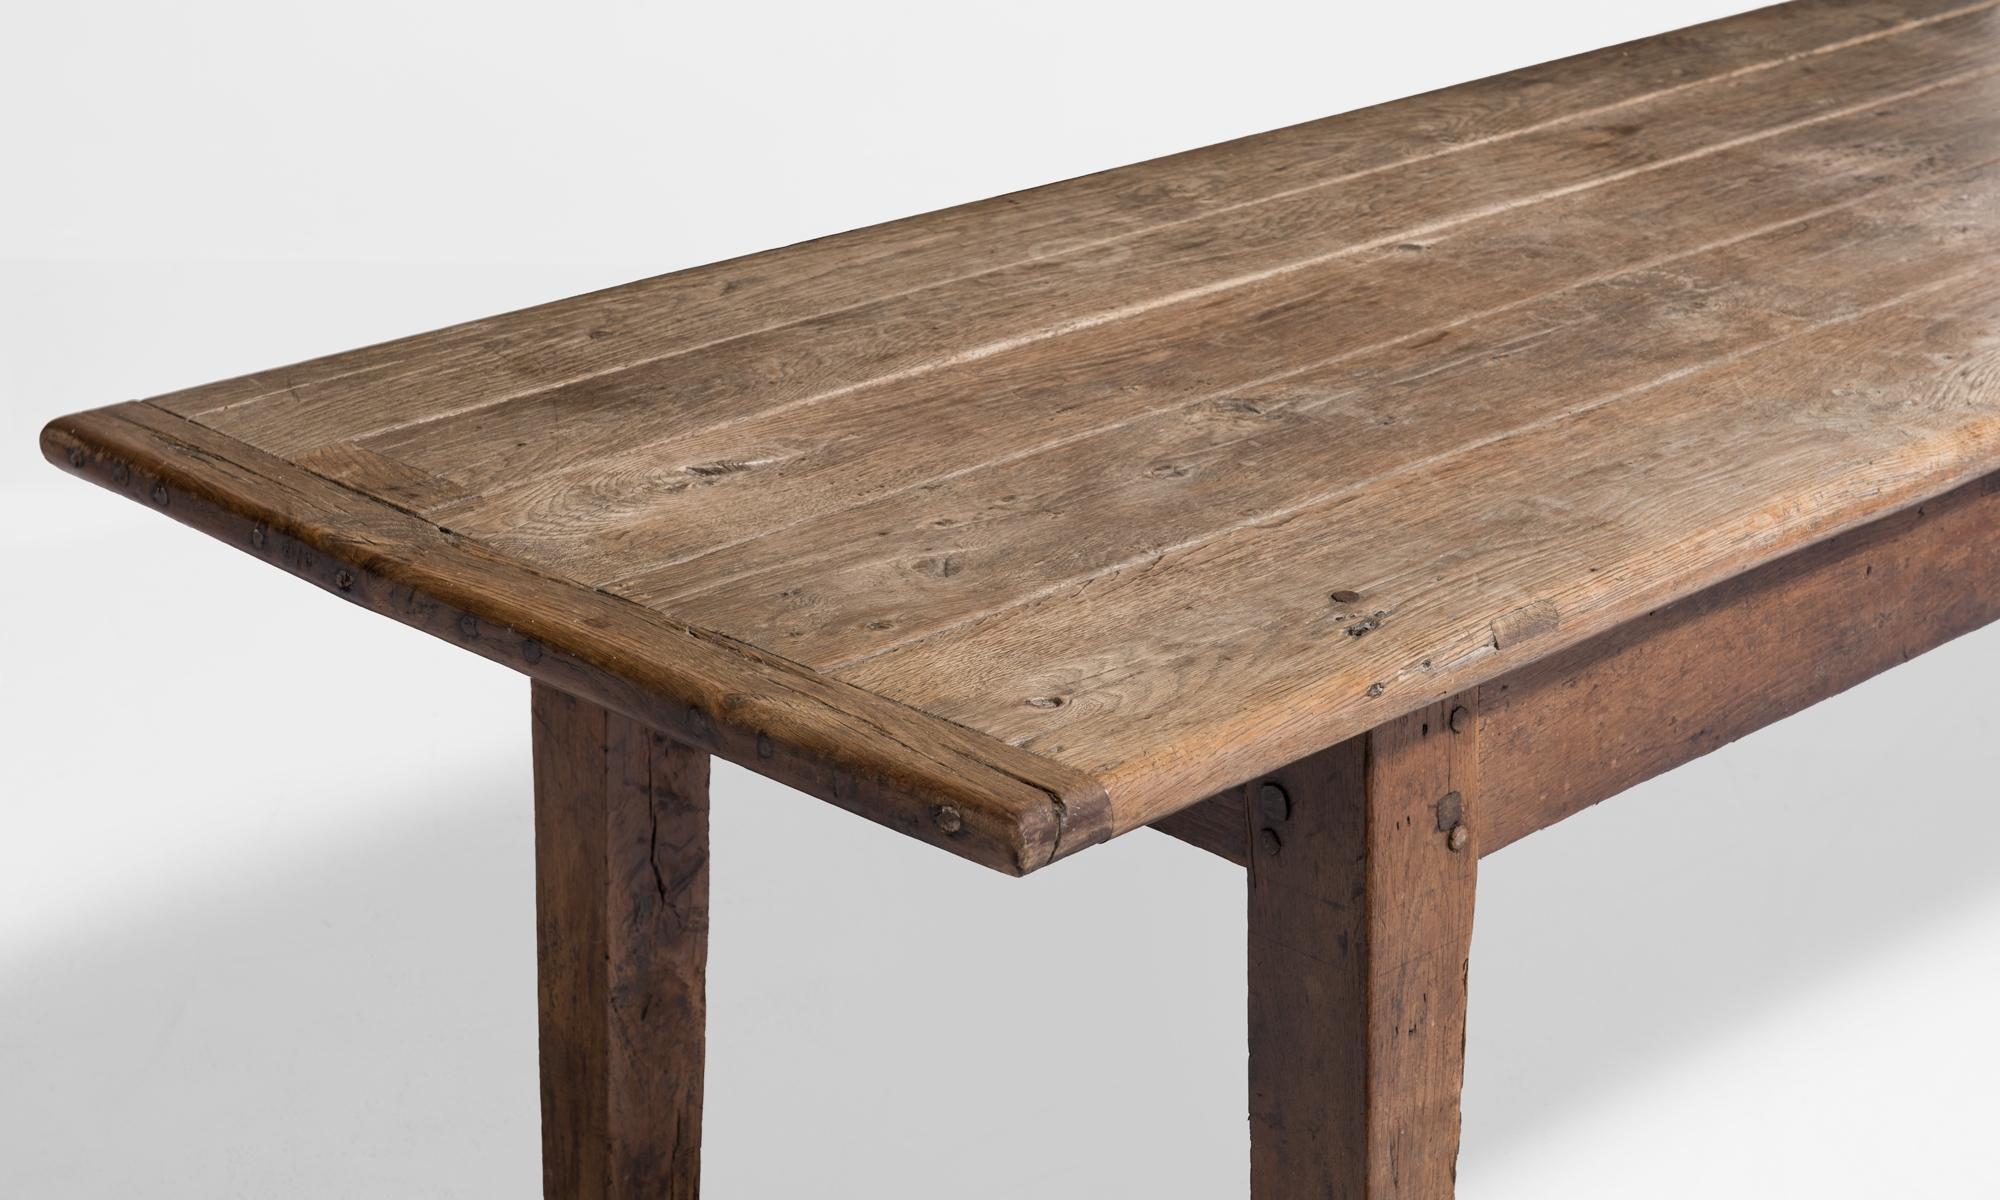 Solid oak table with rectangular plank top. Amazing patina.
England, circa 1750.